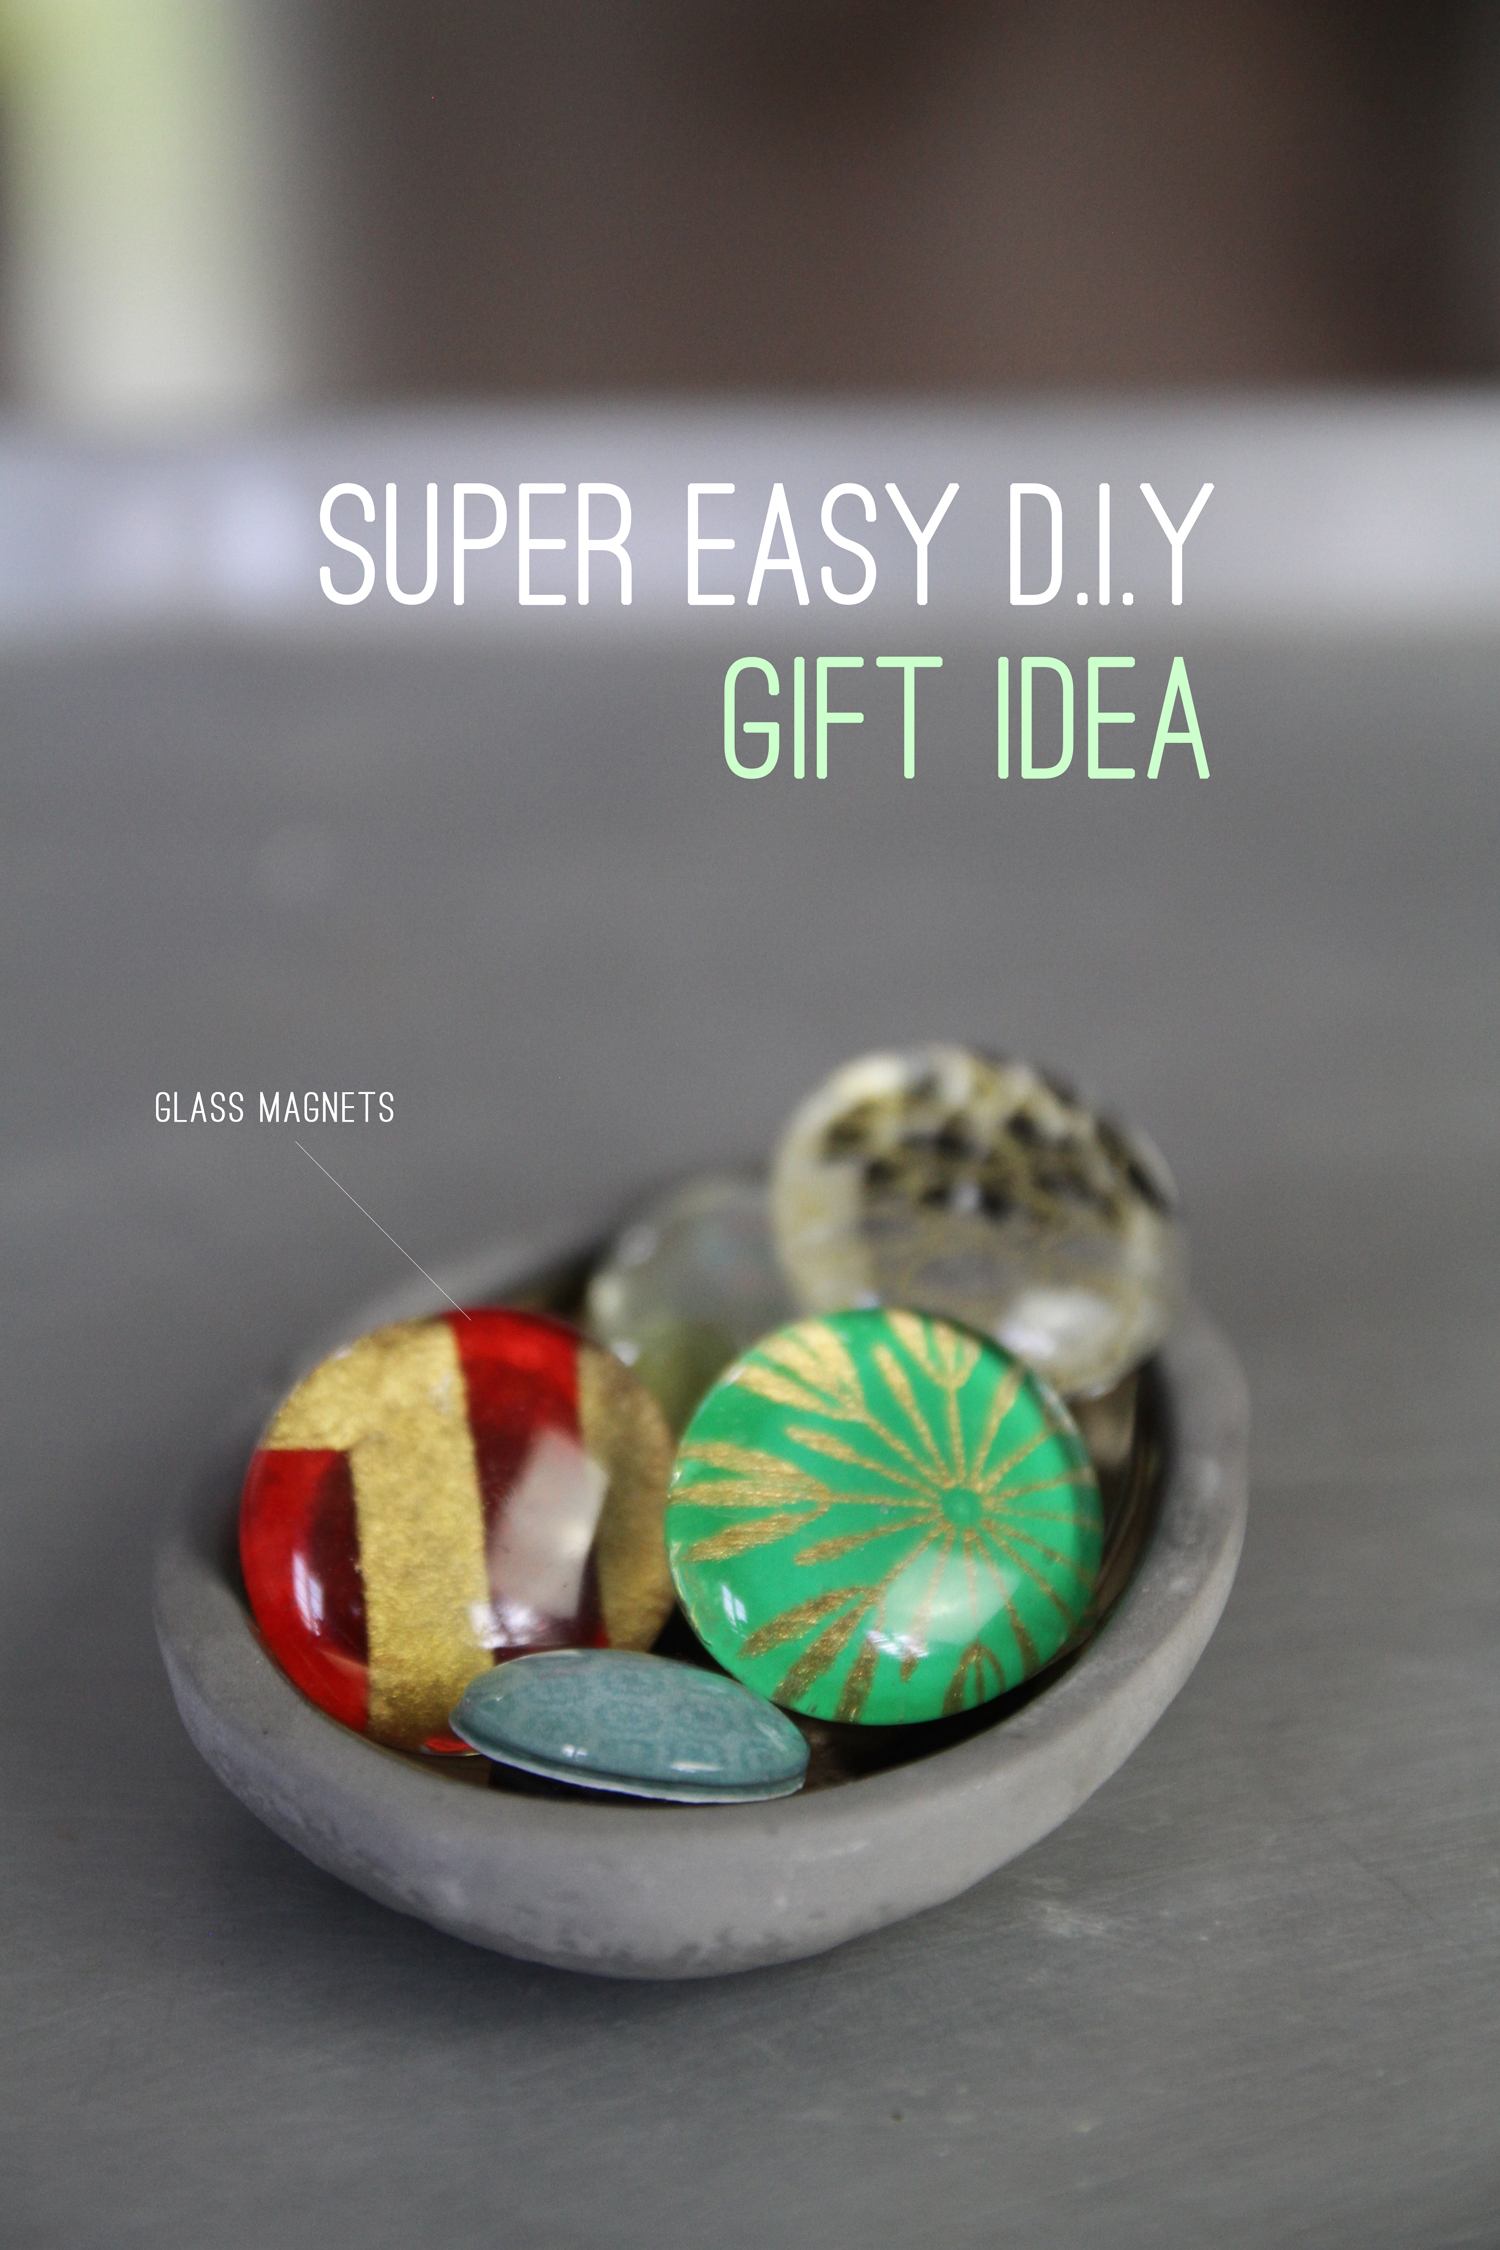 SUPER EASY GIFT D.I.Y.: GLASS MAGNETS — Wondermint Kids